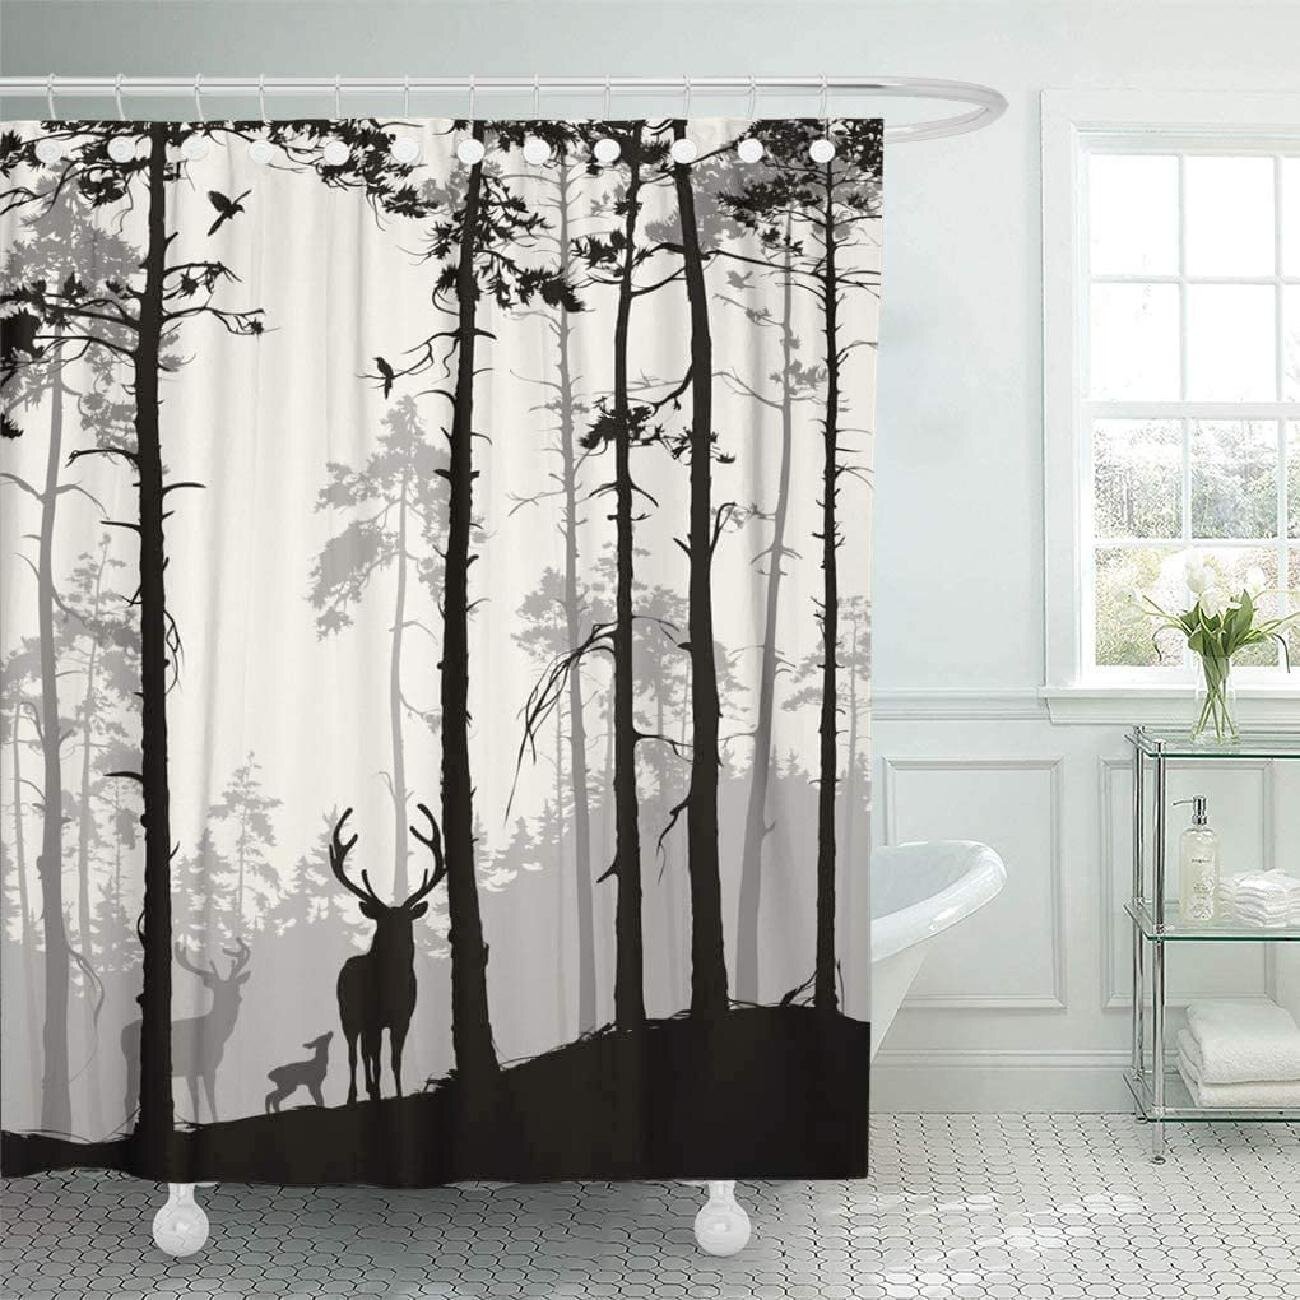 Relaxing Art Lotus Bamboo Shower Curtain Polyester Fabric Waterproof 12 Hooks